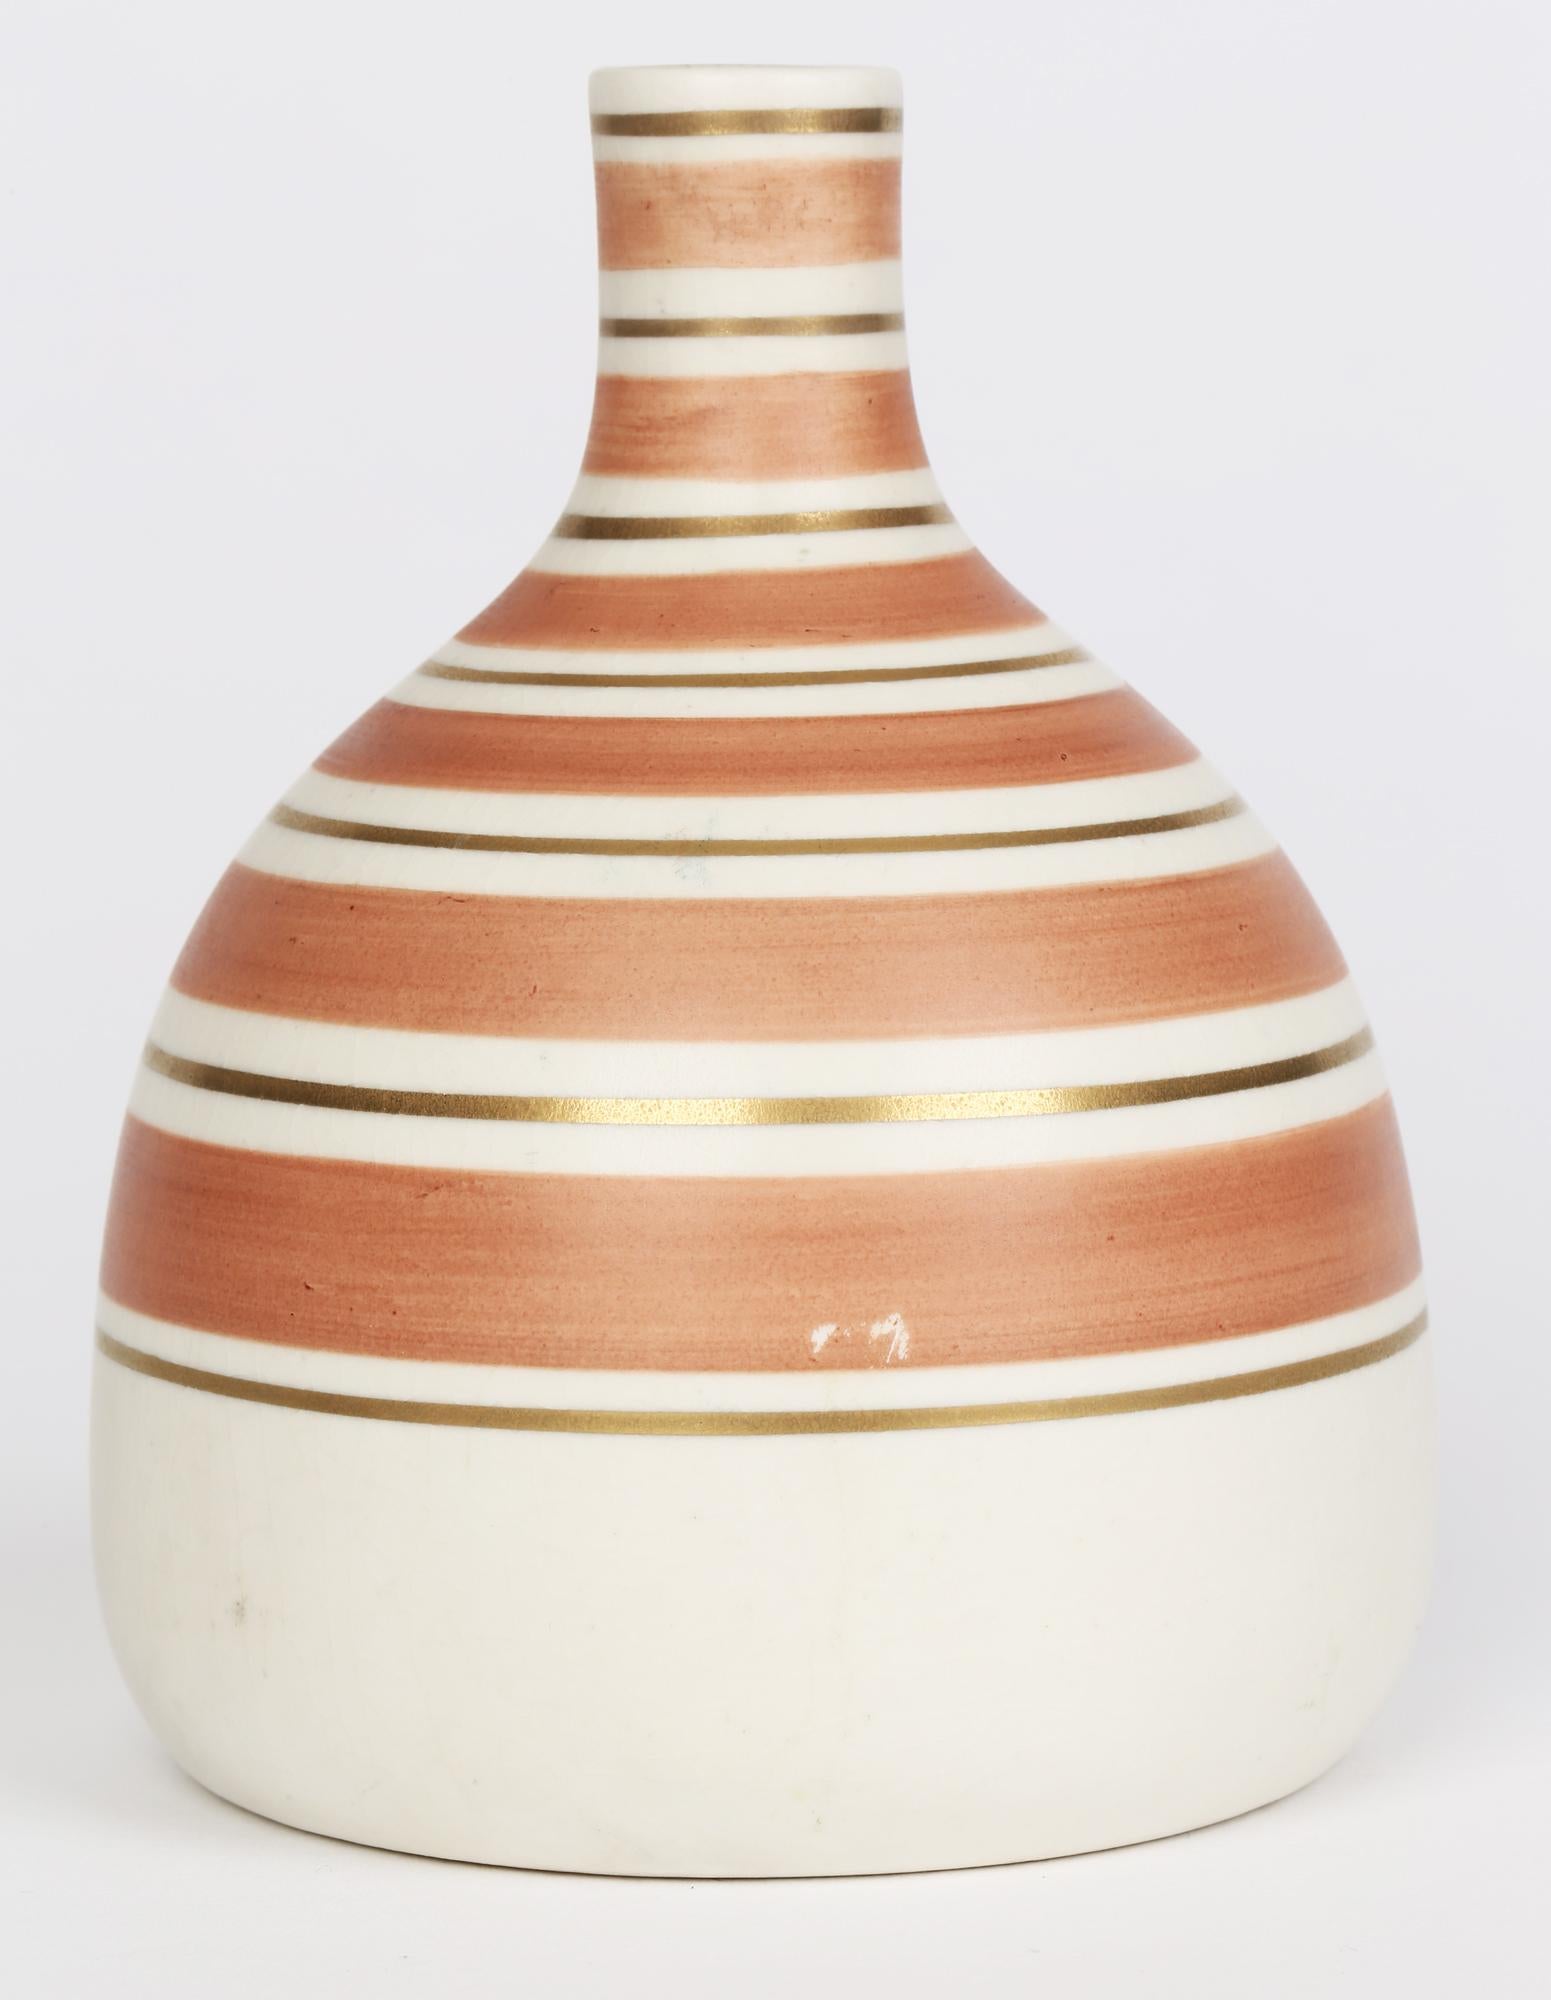 Upsala-Ekeby Gefle Art Deco Art Pottery Linear Pattern Vase For Sale 2